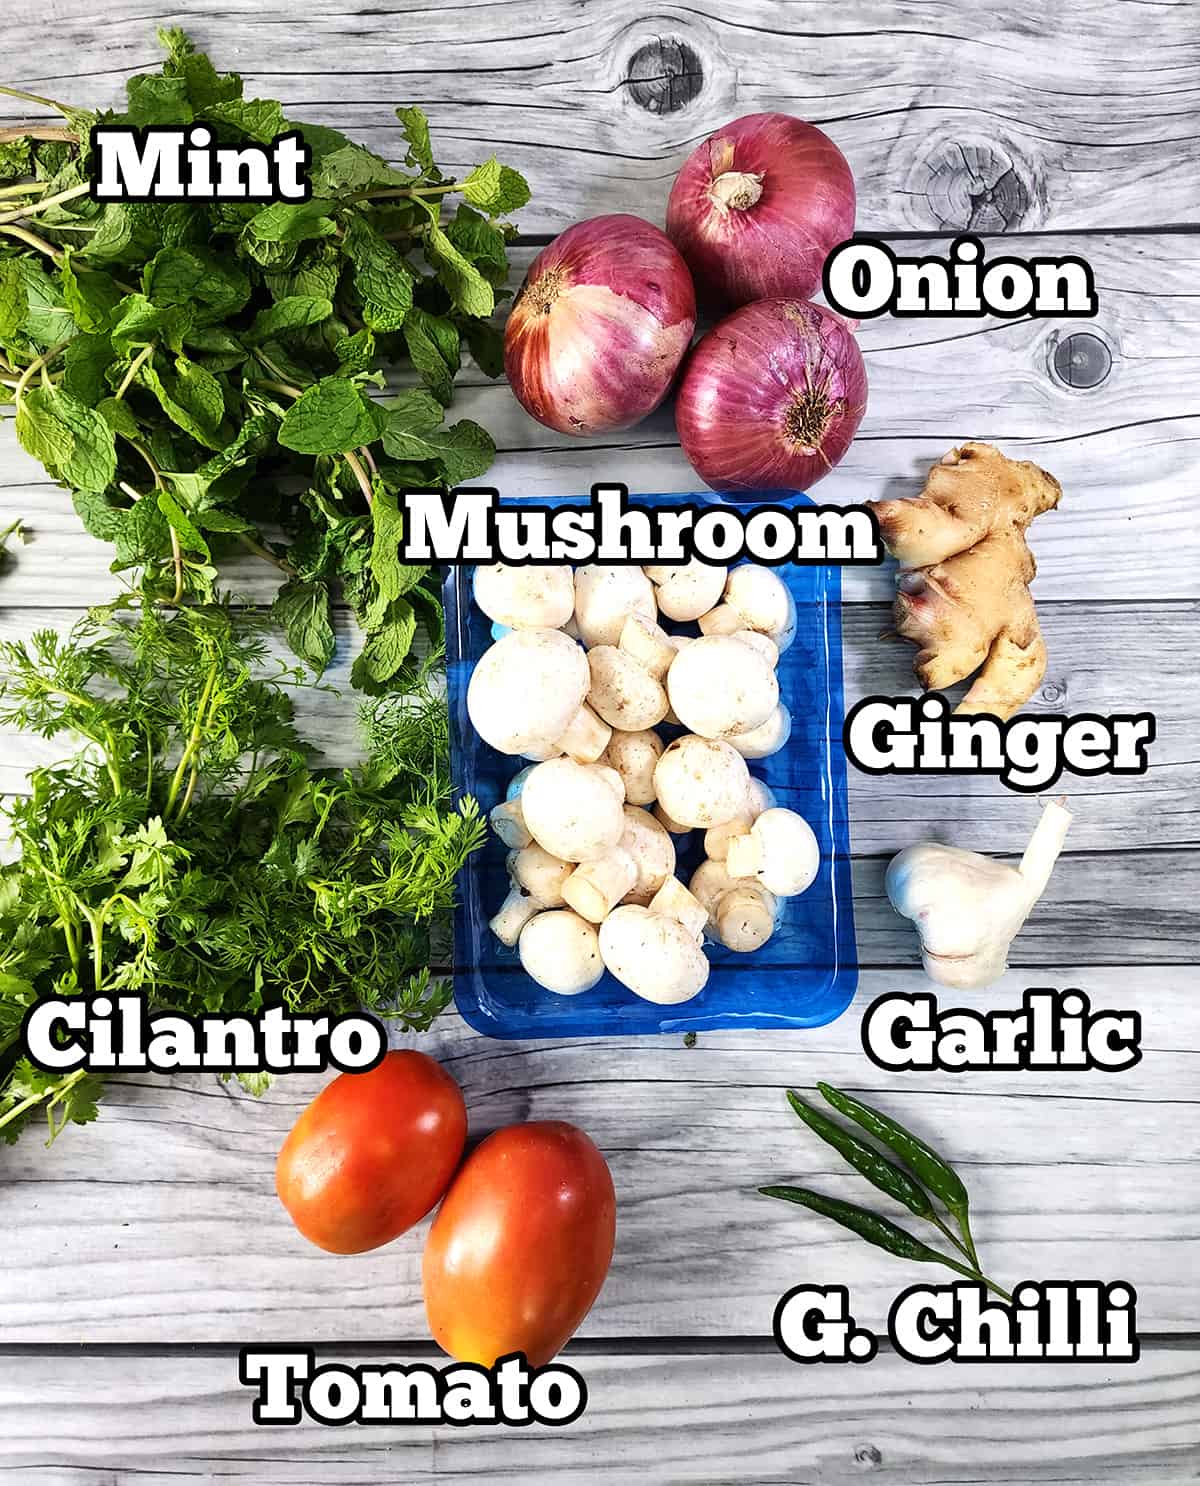 Mushroom biryani recipe ingredients. 